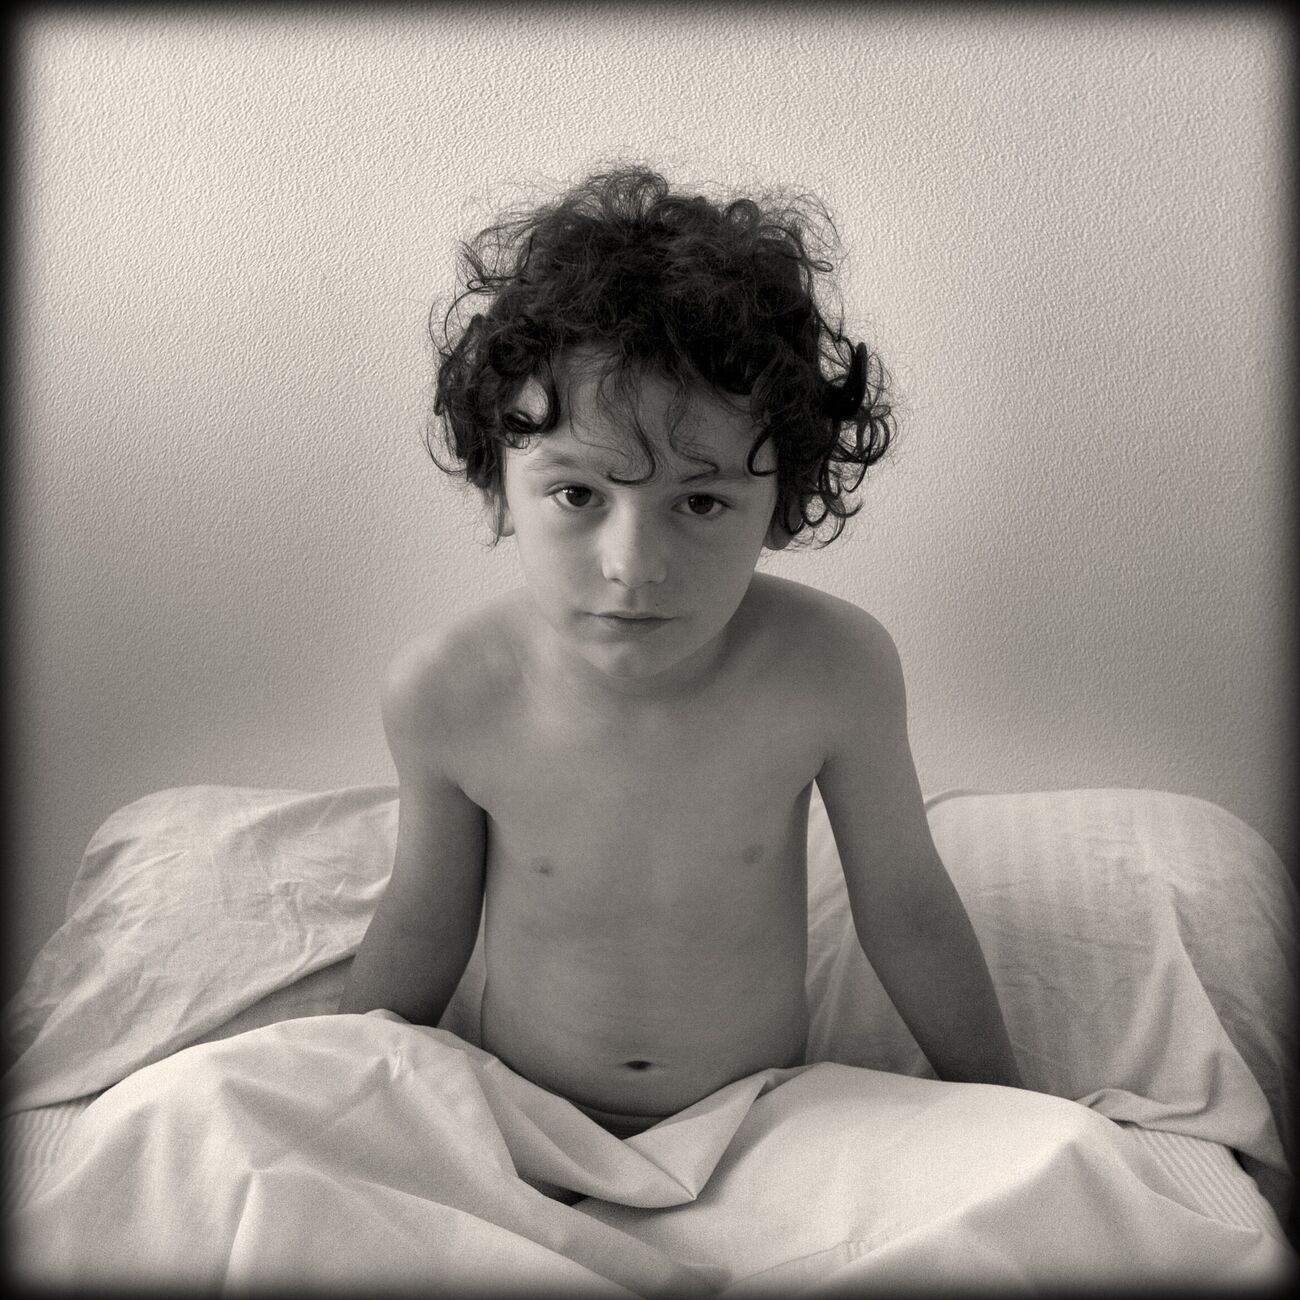 Acheter une photographie 13 x 13 cm, The waking. Ref-690-19 - Denis Olivier Photographie d'Art